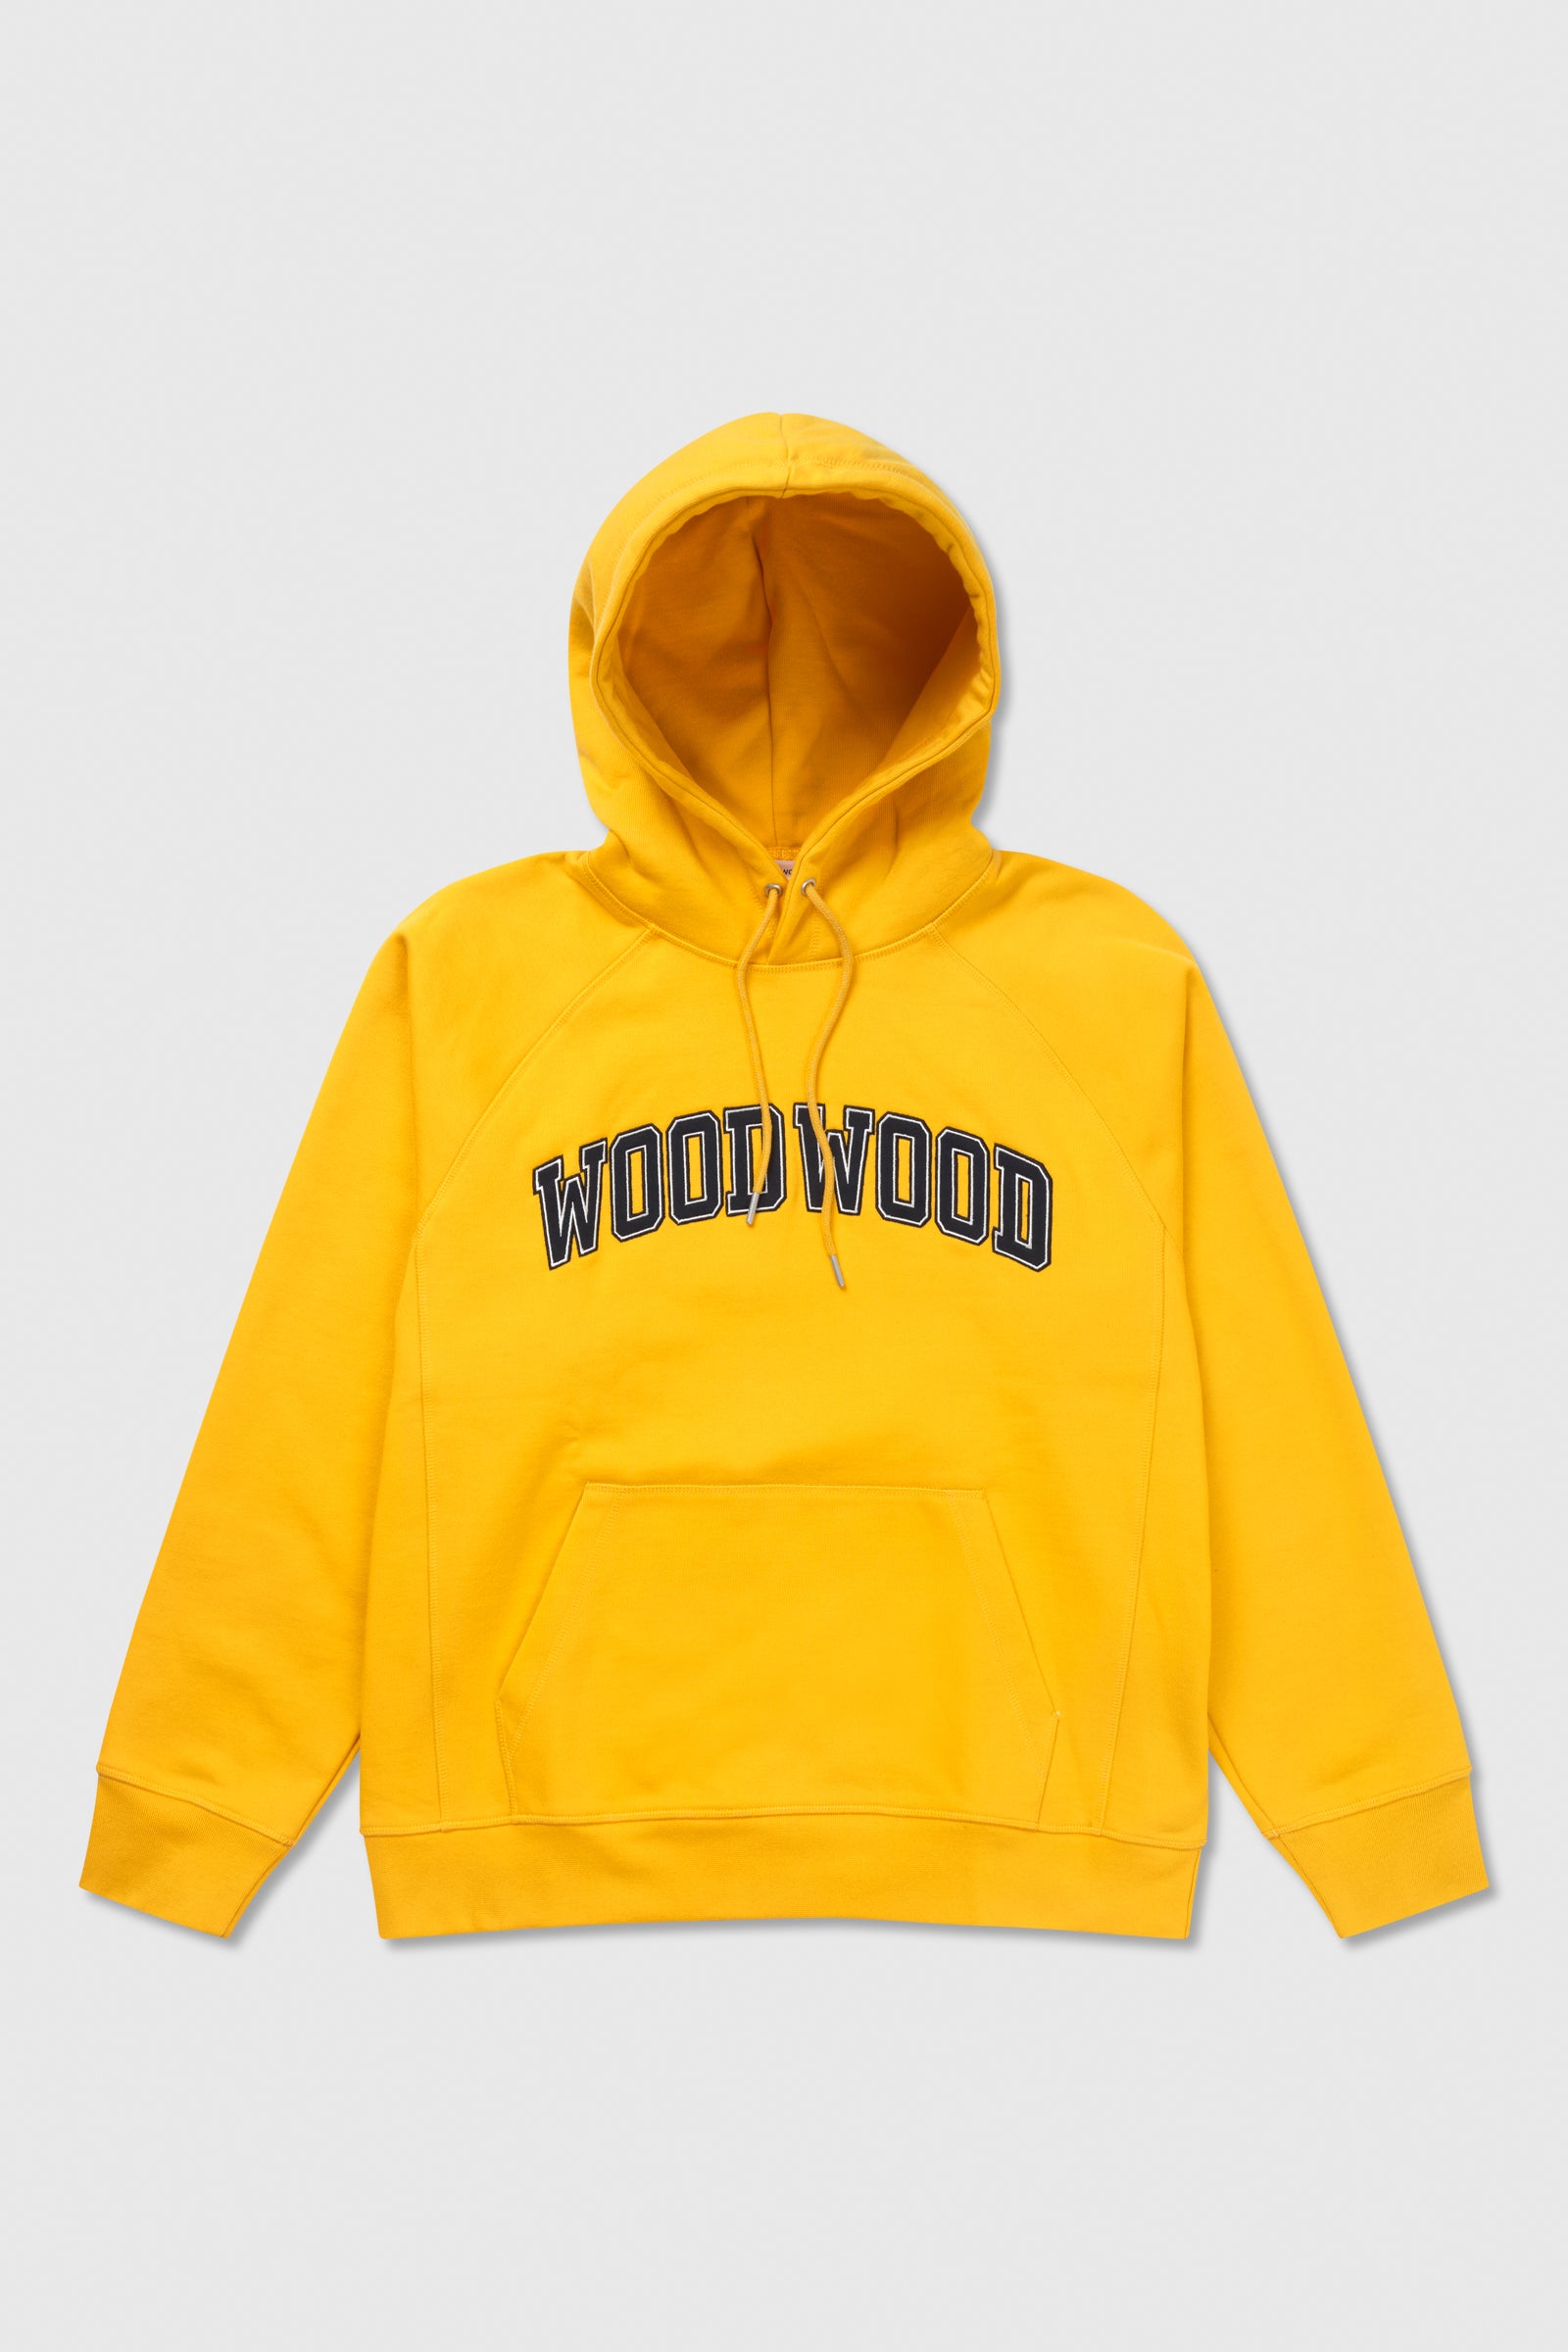 Wood Wood Fred IVY Hoodie Yellow- 12215617-2493